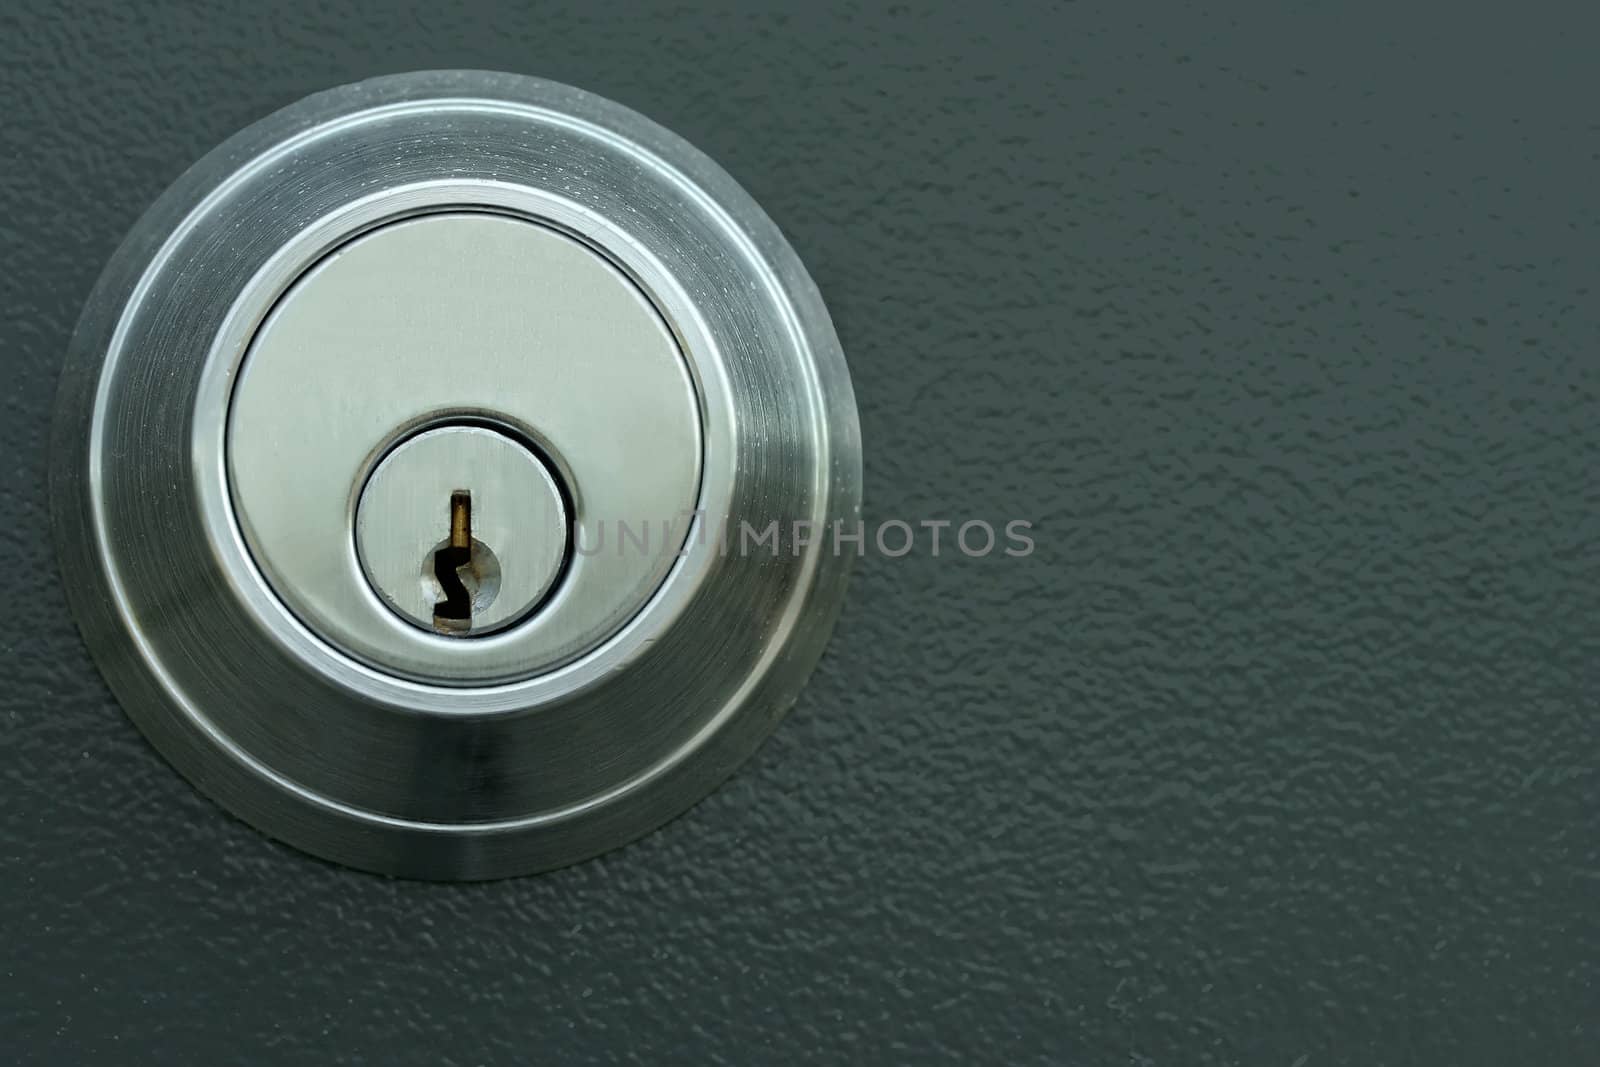 Metallic door lock and keyhole